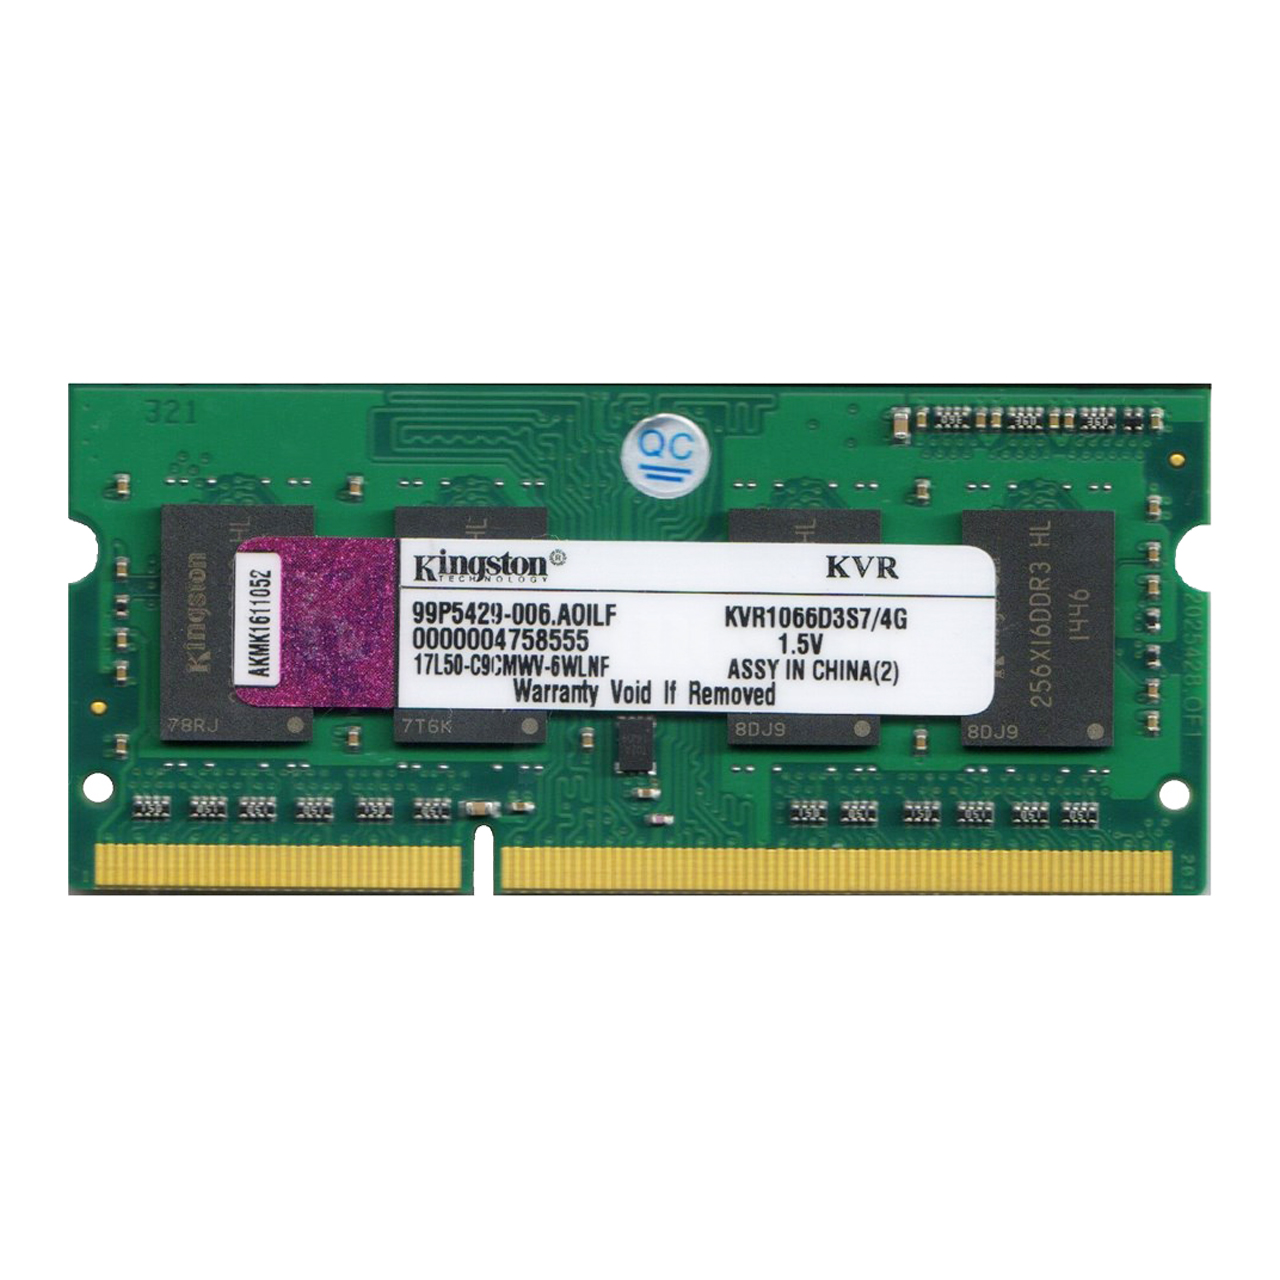  رم لپ تاپ DDR3 تک کاناله 1066 مگاهرتز CL9 کینگستون مدل B3 ظرفیت 2 گیگابایت